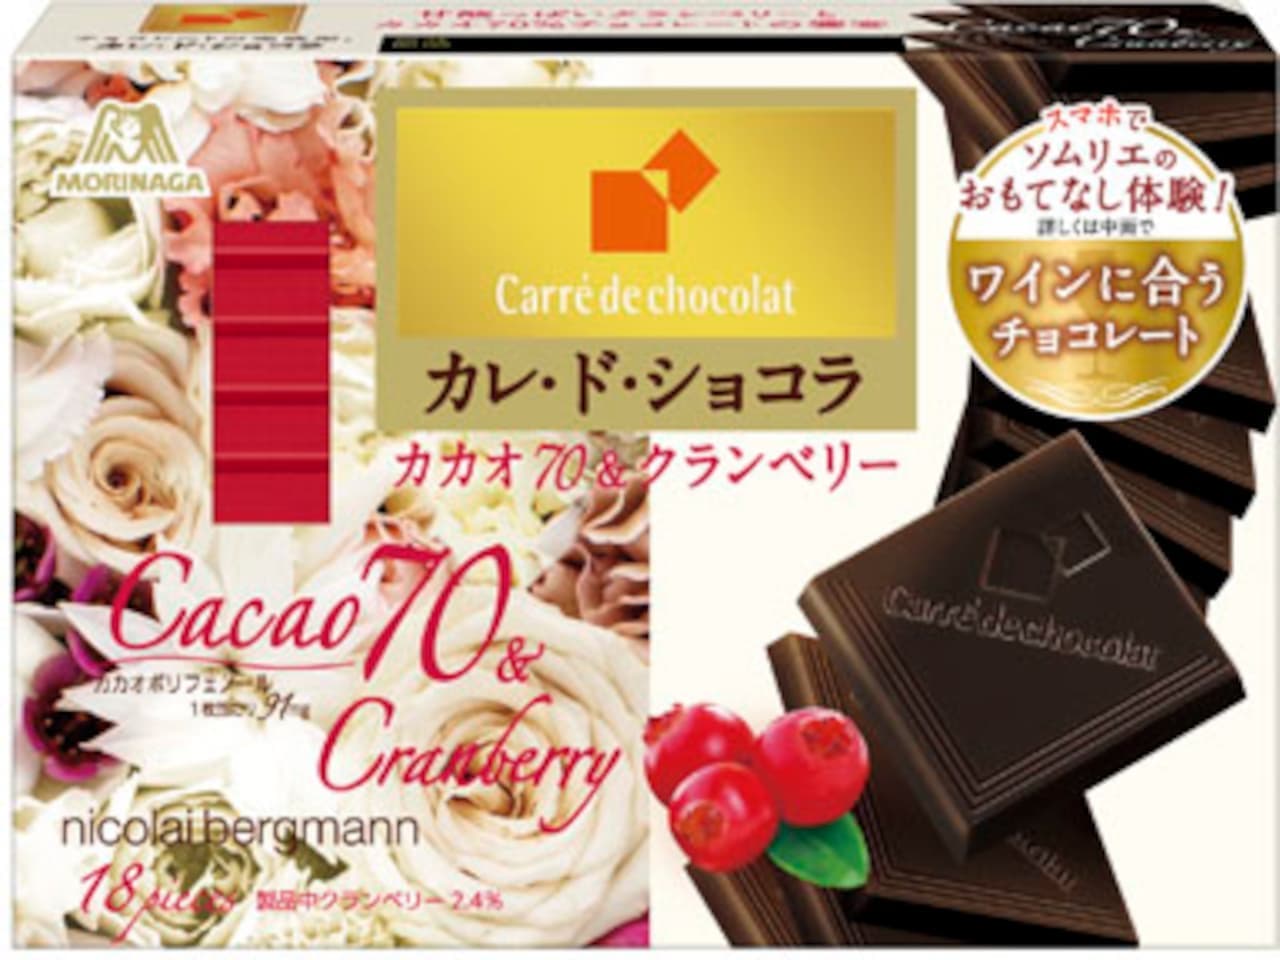 Morinaga "Carre de Chocolat" Flower Package in Collaboration with Nicolai Bergmann!